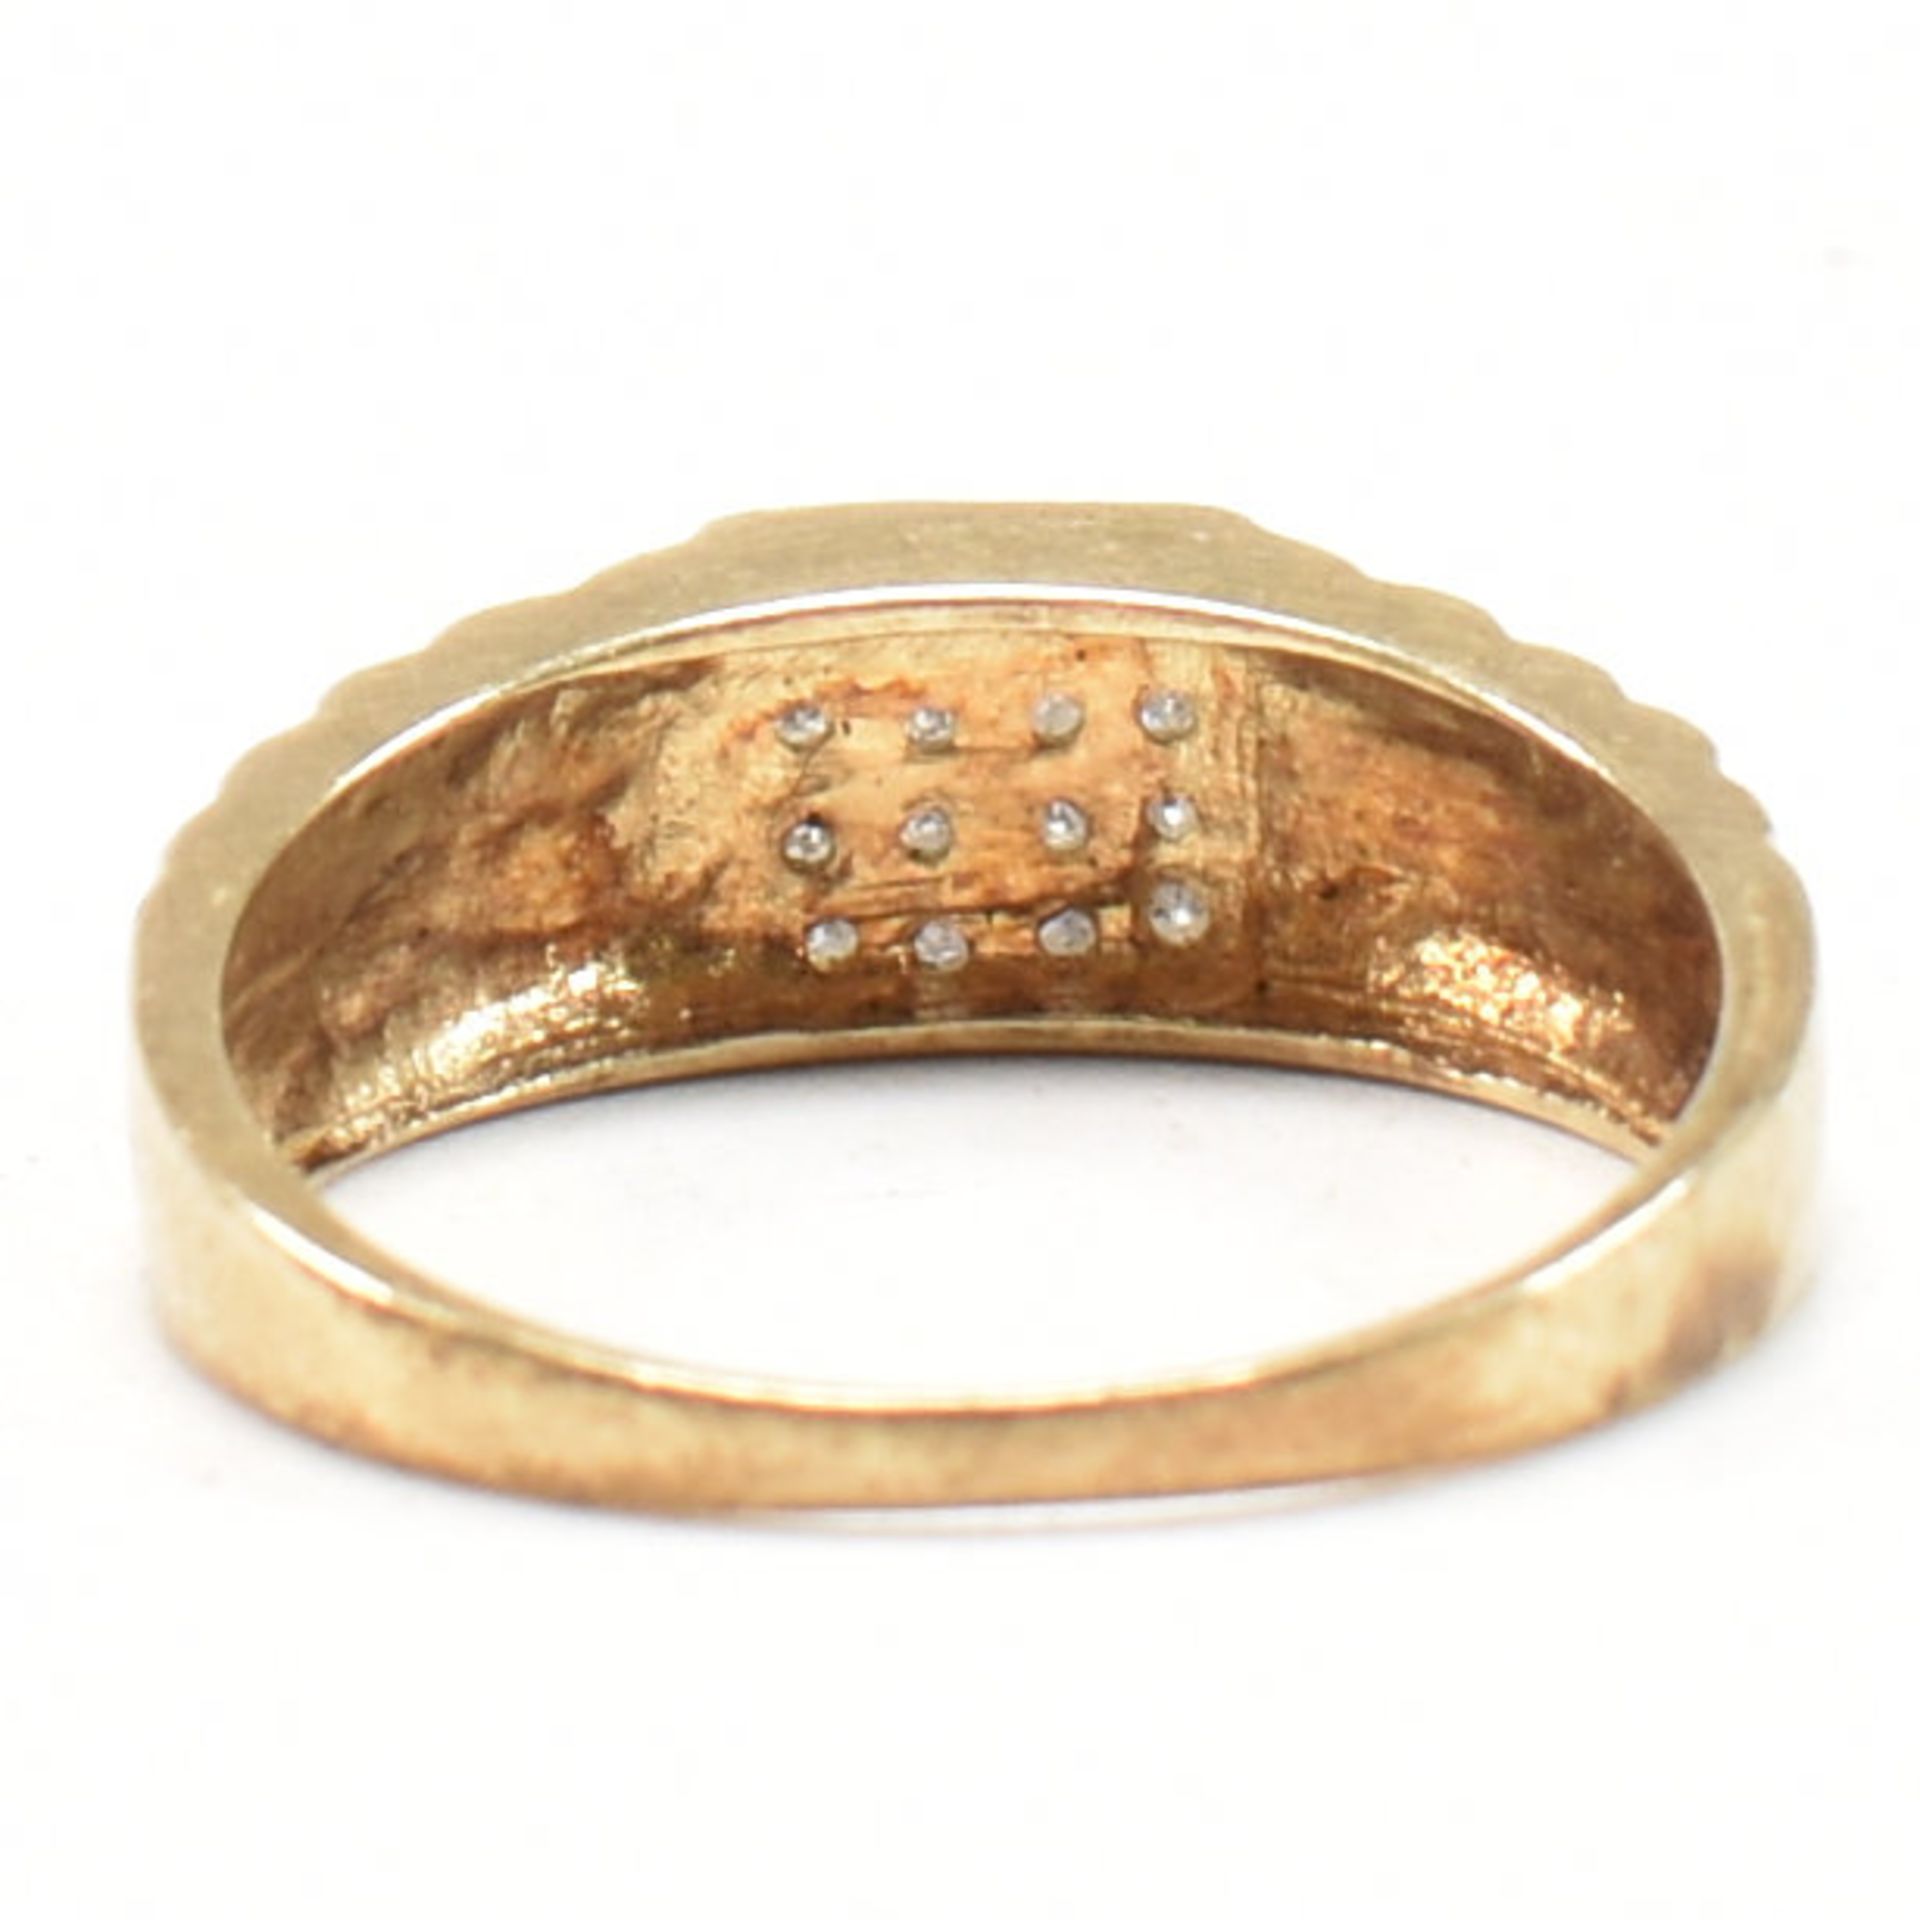 HALLMARKED 9CT GOLD & DIAMOND SIGNET RING - Image 7 of 9